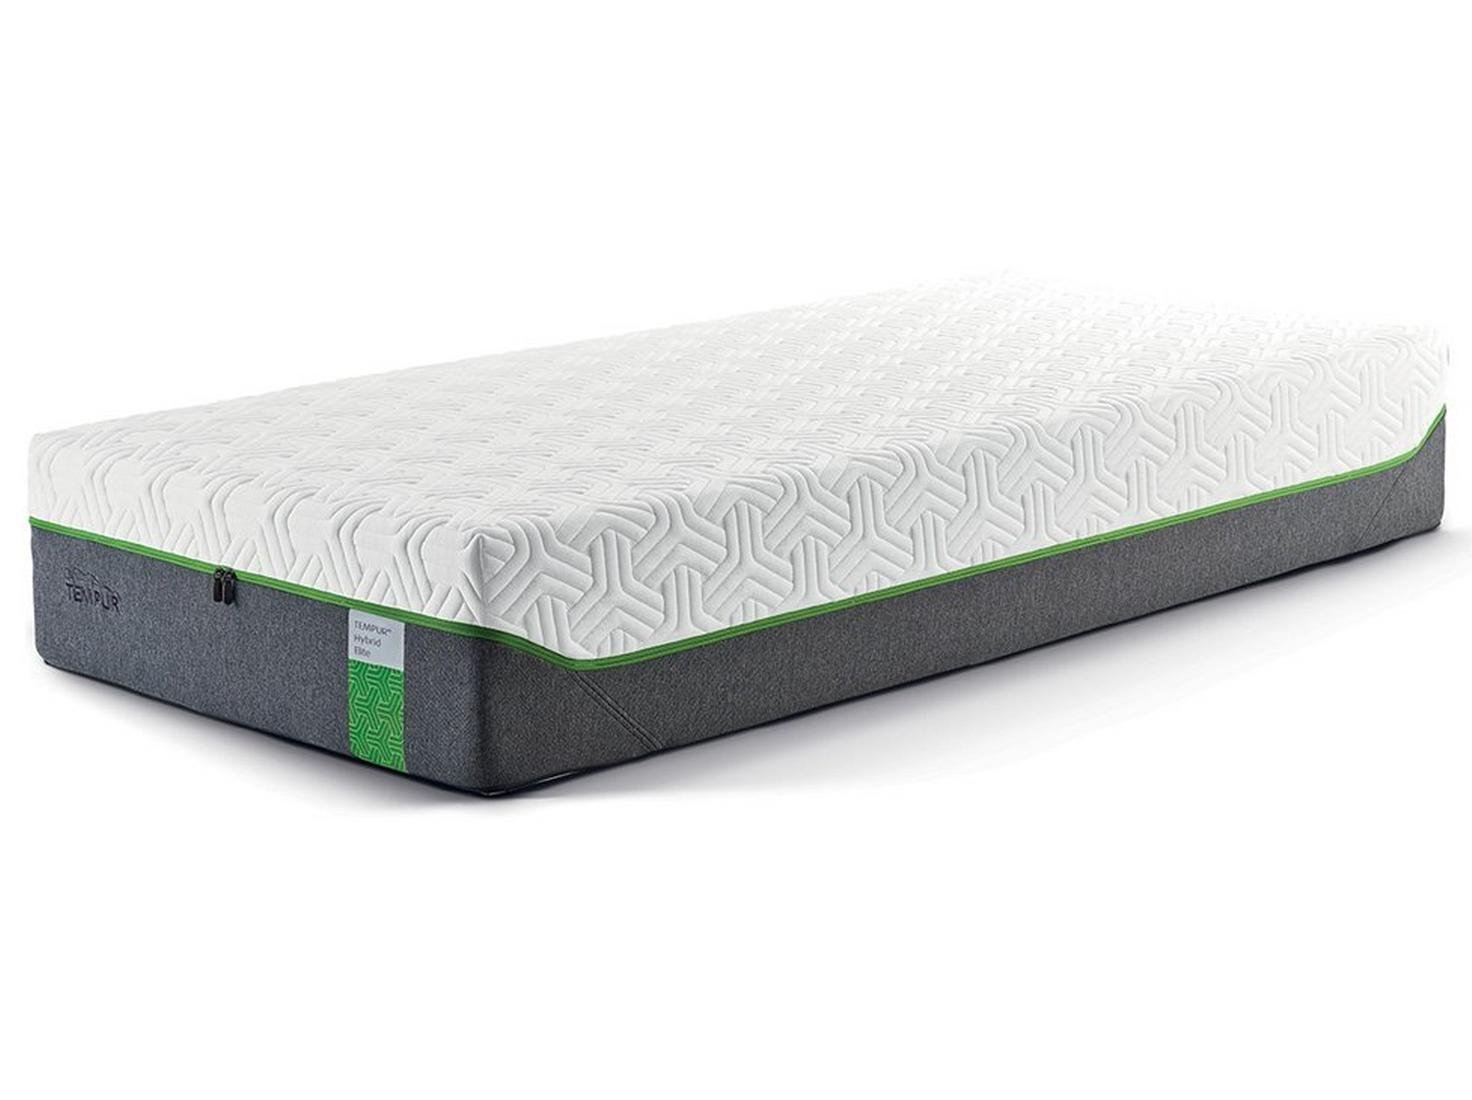 tempur cooltouch hybrid elite mattress